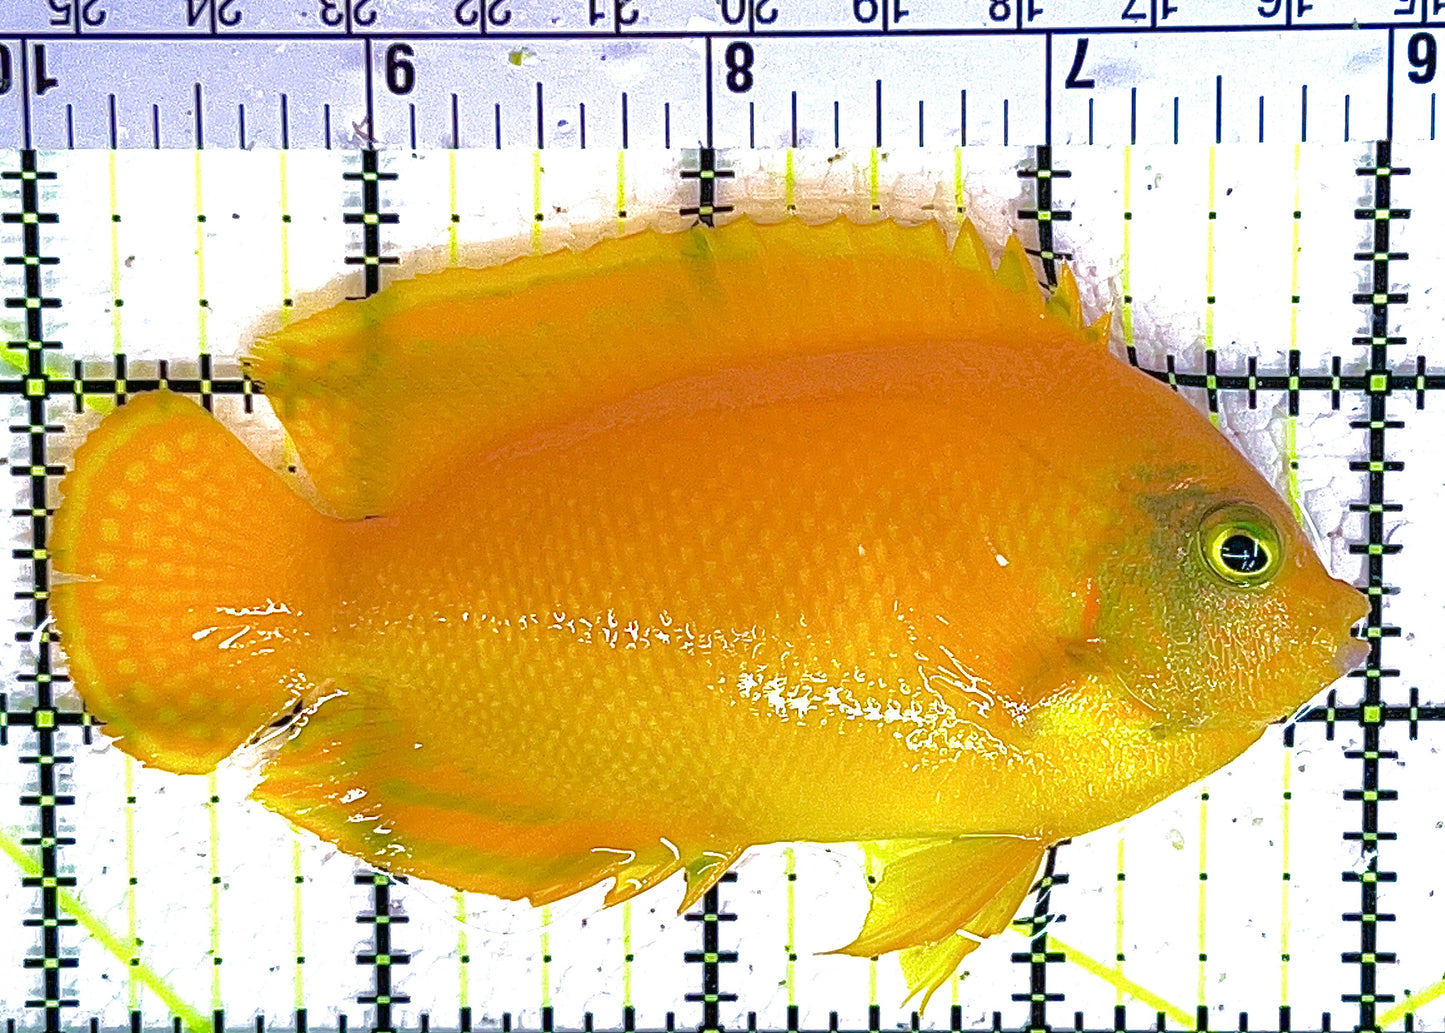 Herald's Angelfish HA042802 WYSIWYG Size: XL 4" approx